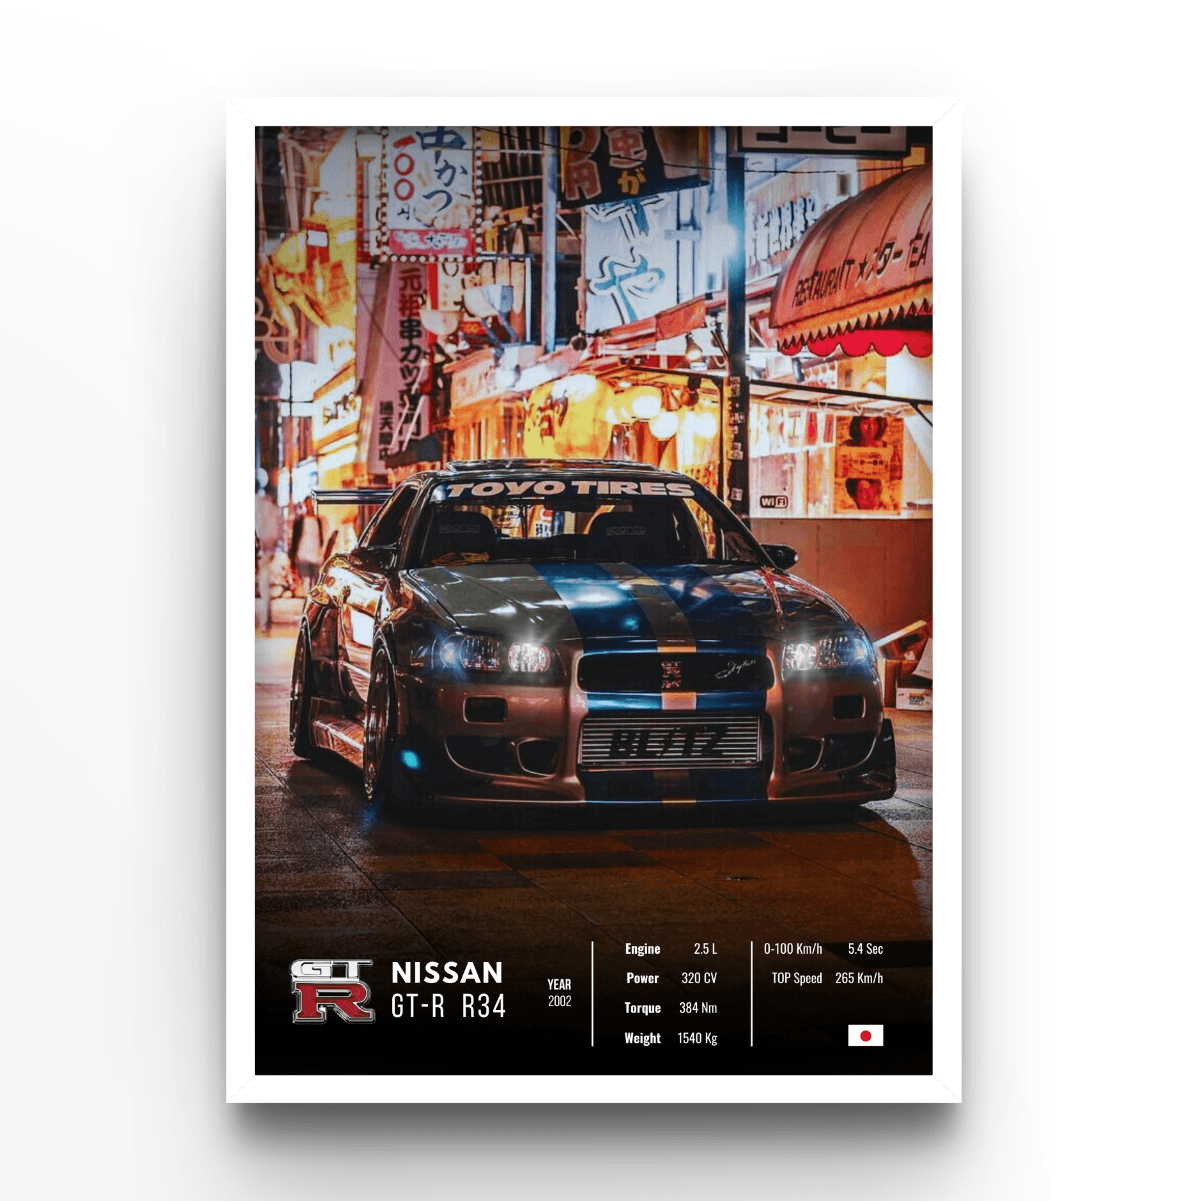 Nissan GT-R R34 Collector - A4, A3, A2 Posters Base - Poster Print Shop / Art Prints / PostersBase